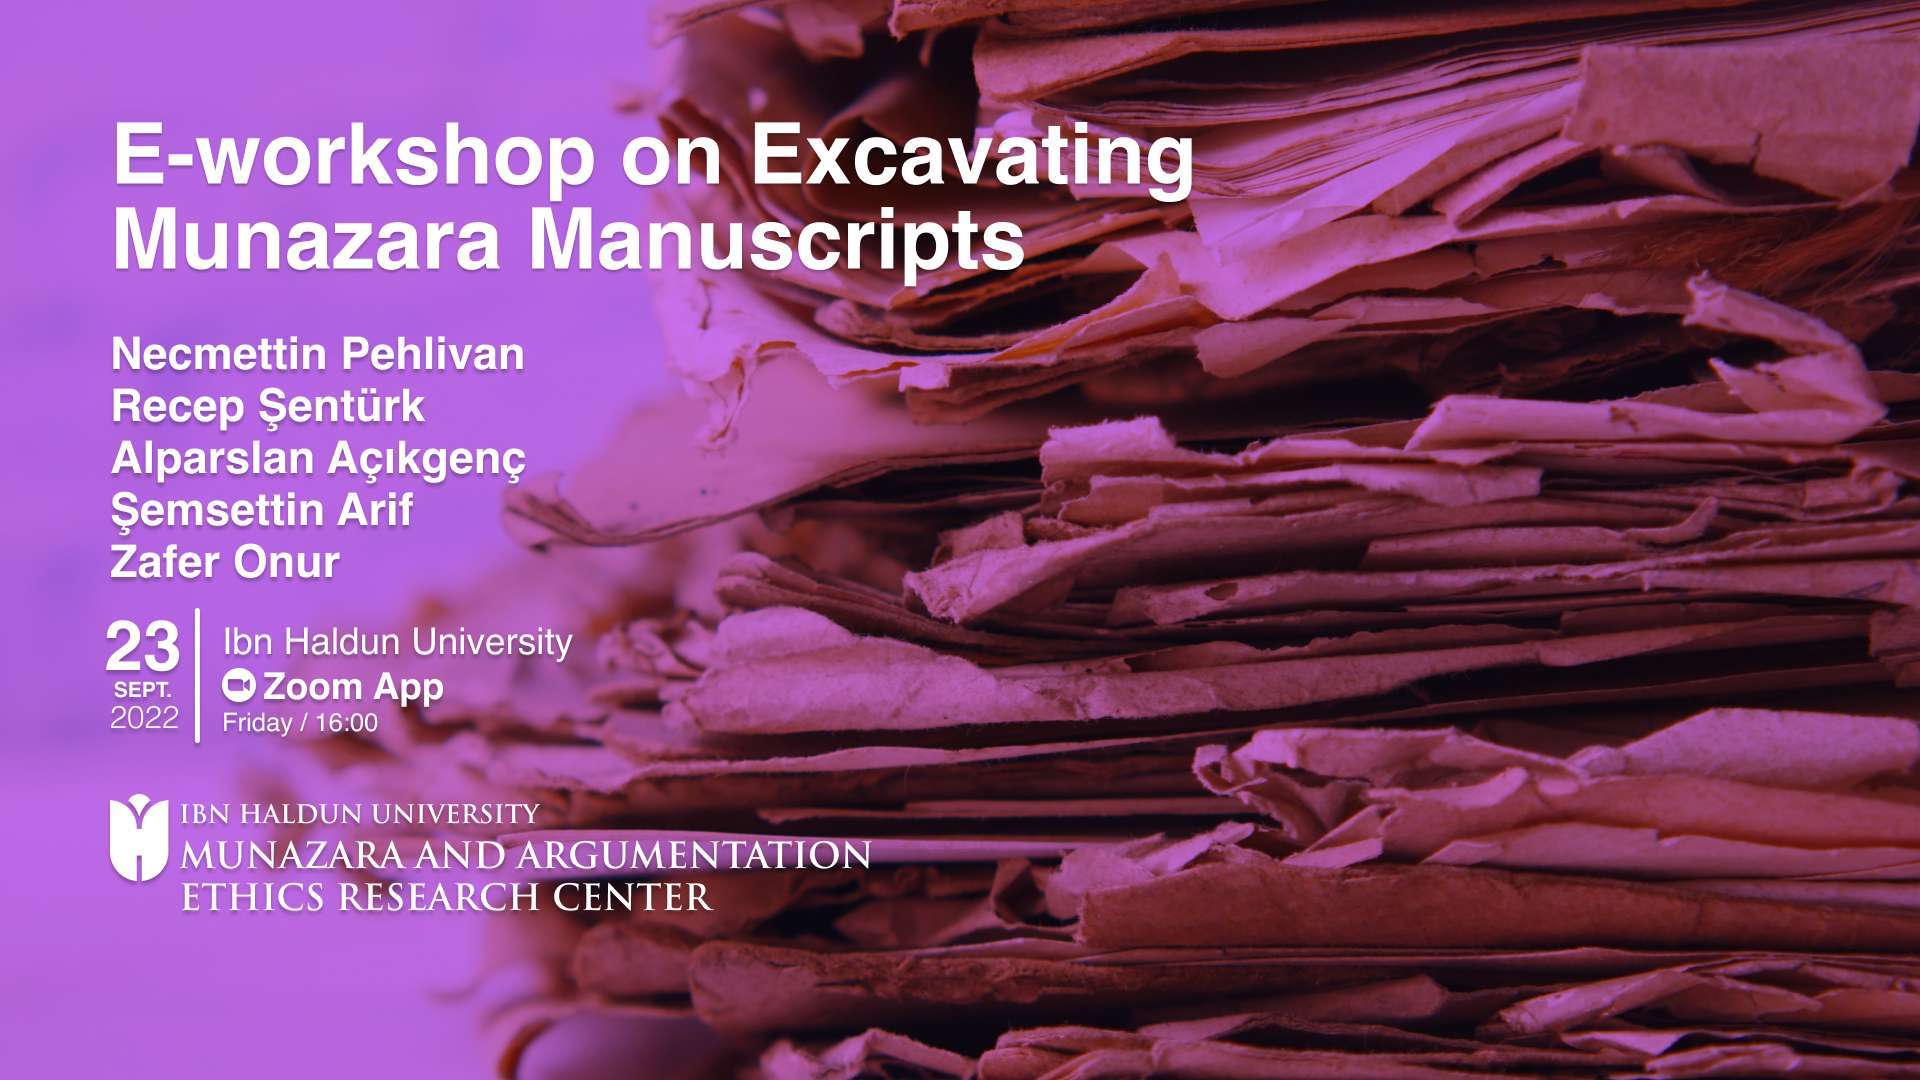 E-workshop on Excavating Munazara Manuscripts